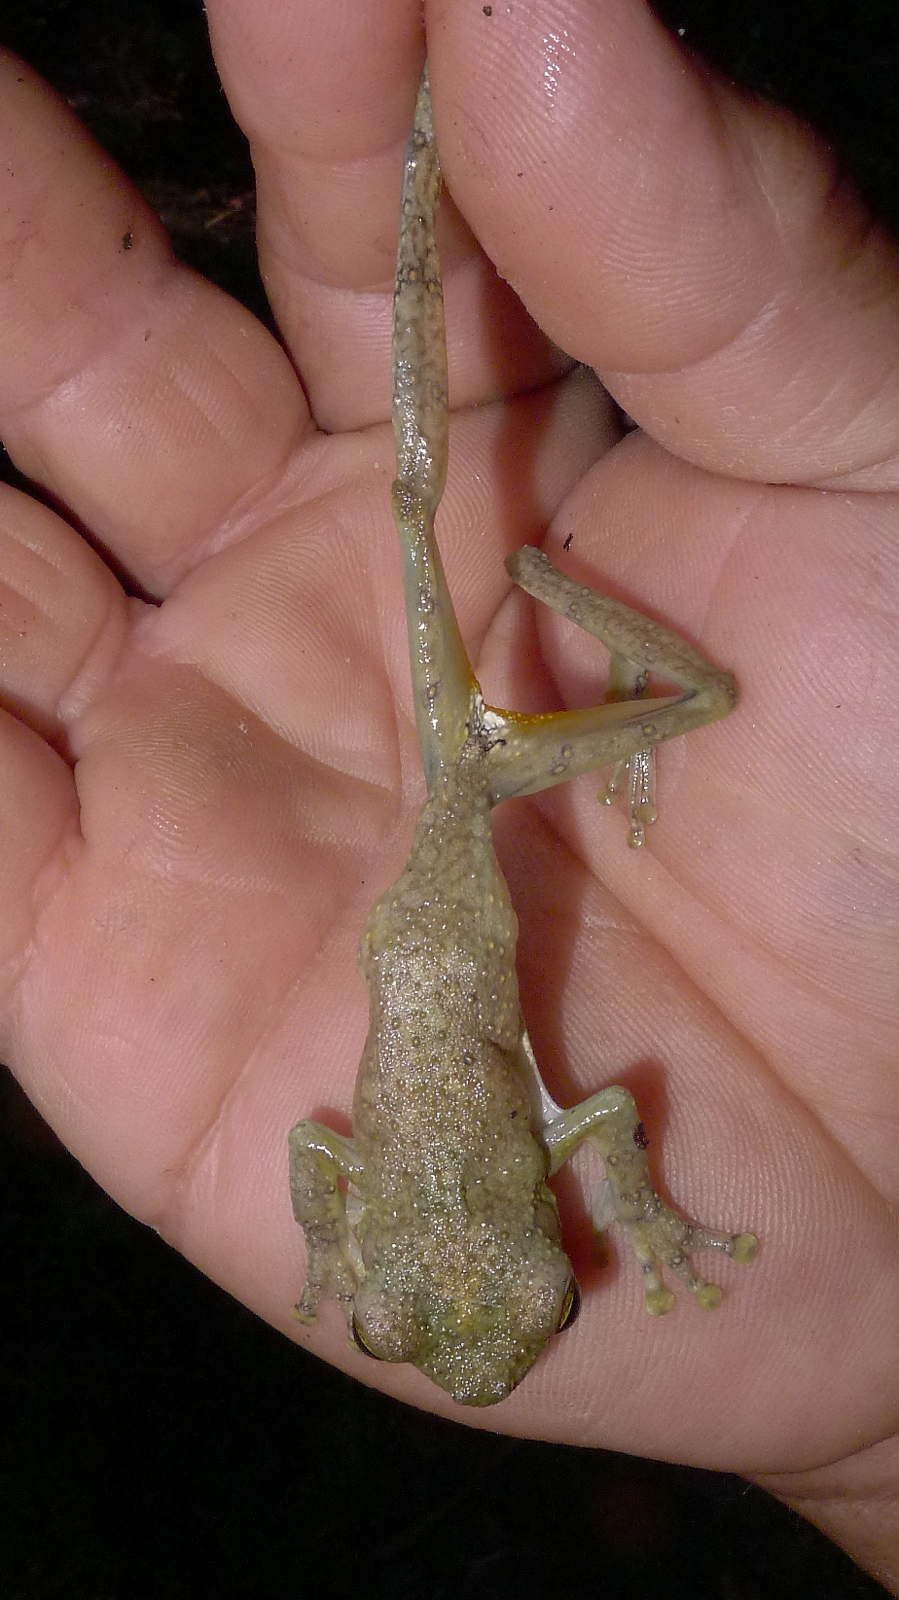 a tiny gecko on the palm of a hand